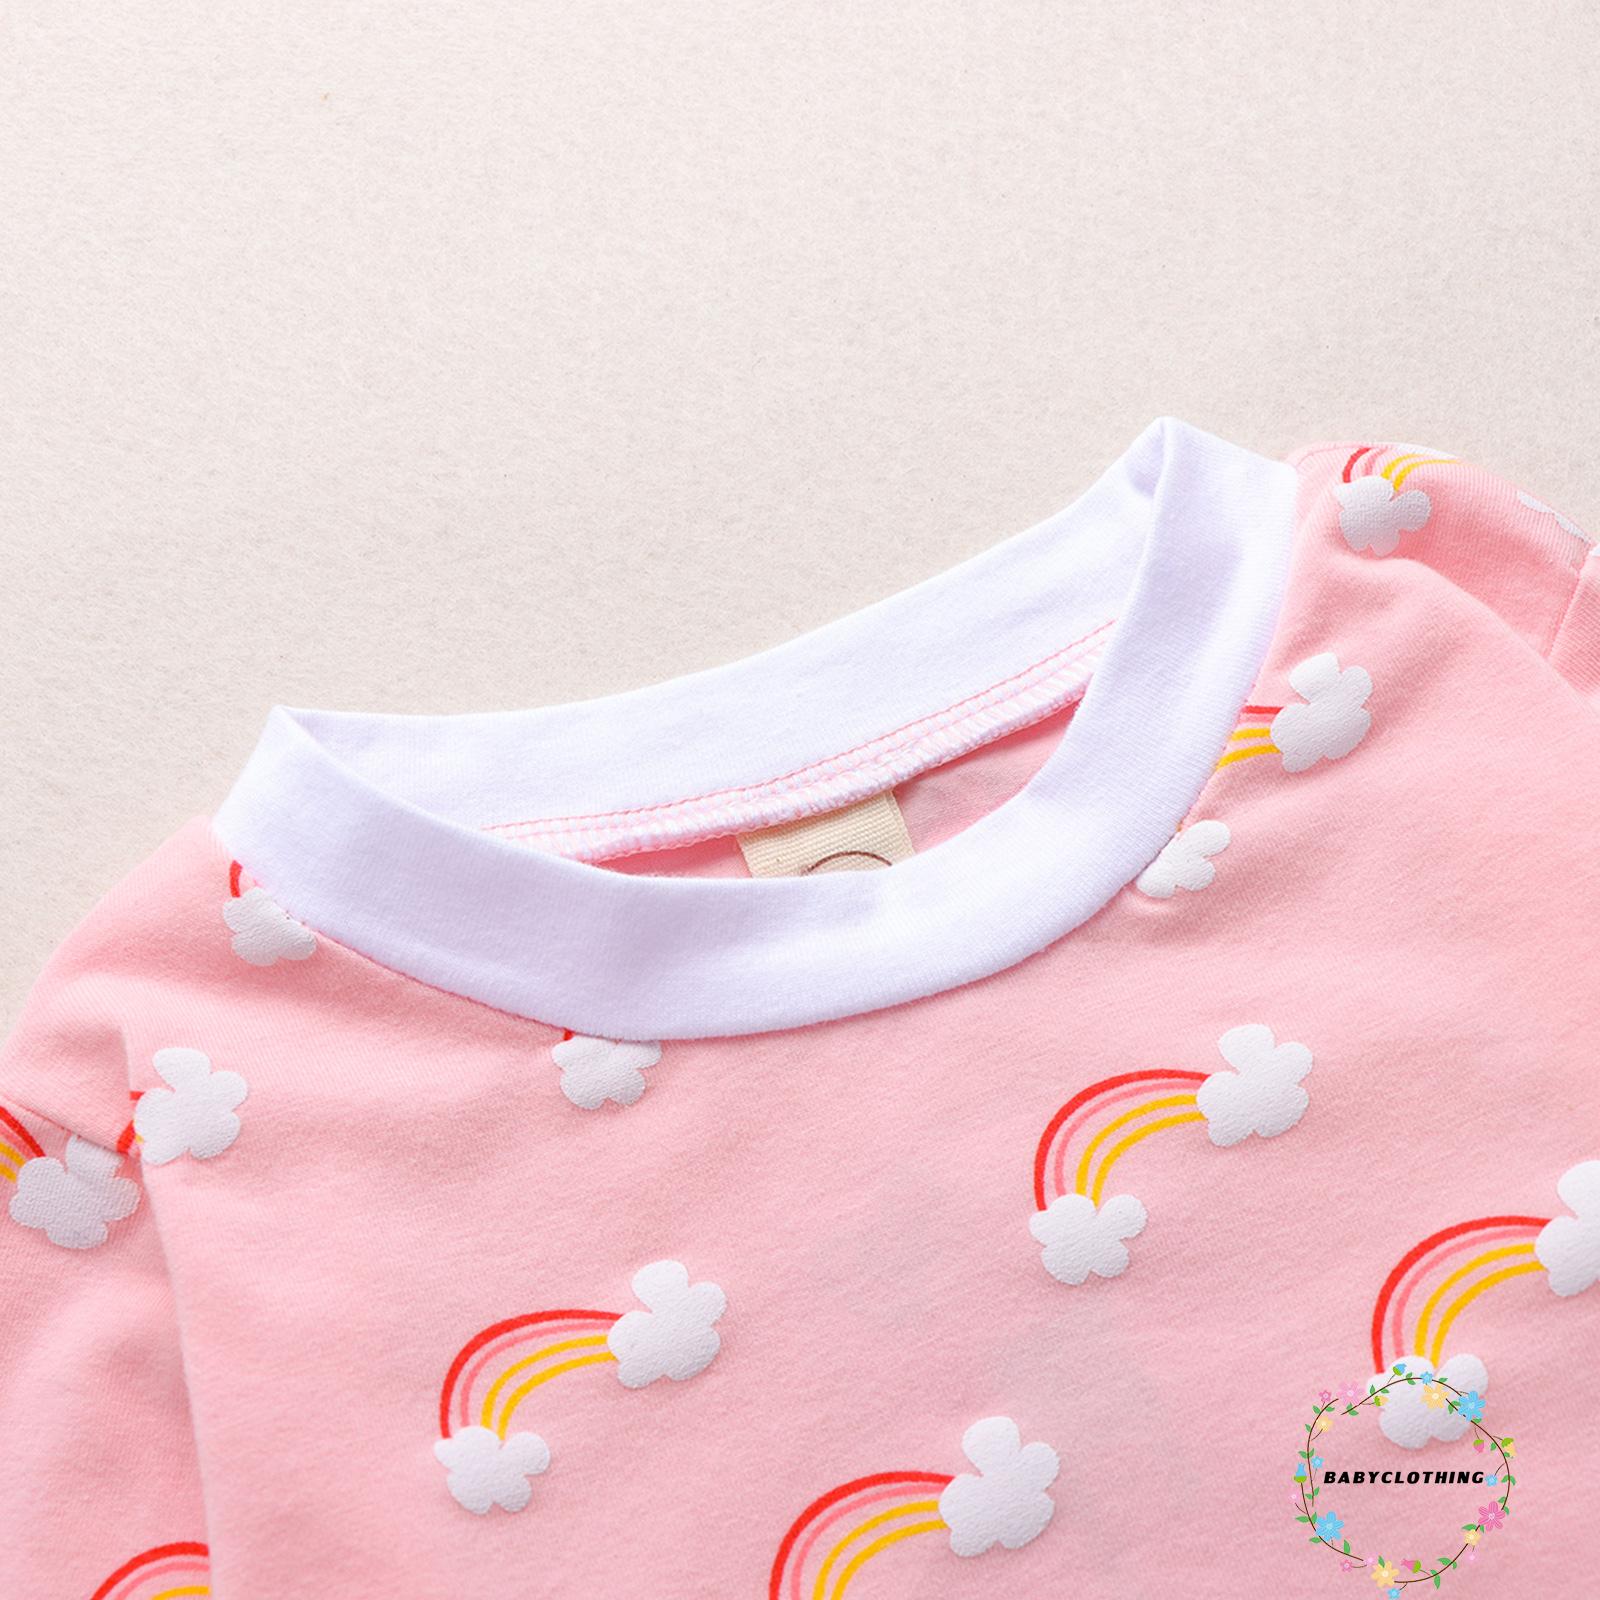 BBCQ-Newborn Baby Fashion Rainbow Print Top Casual Long Sleeve Top for Kids Boys Girls